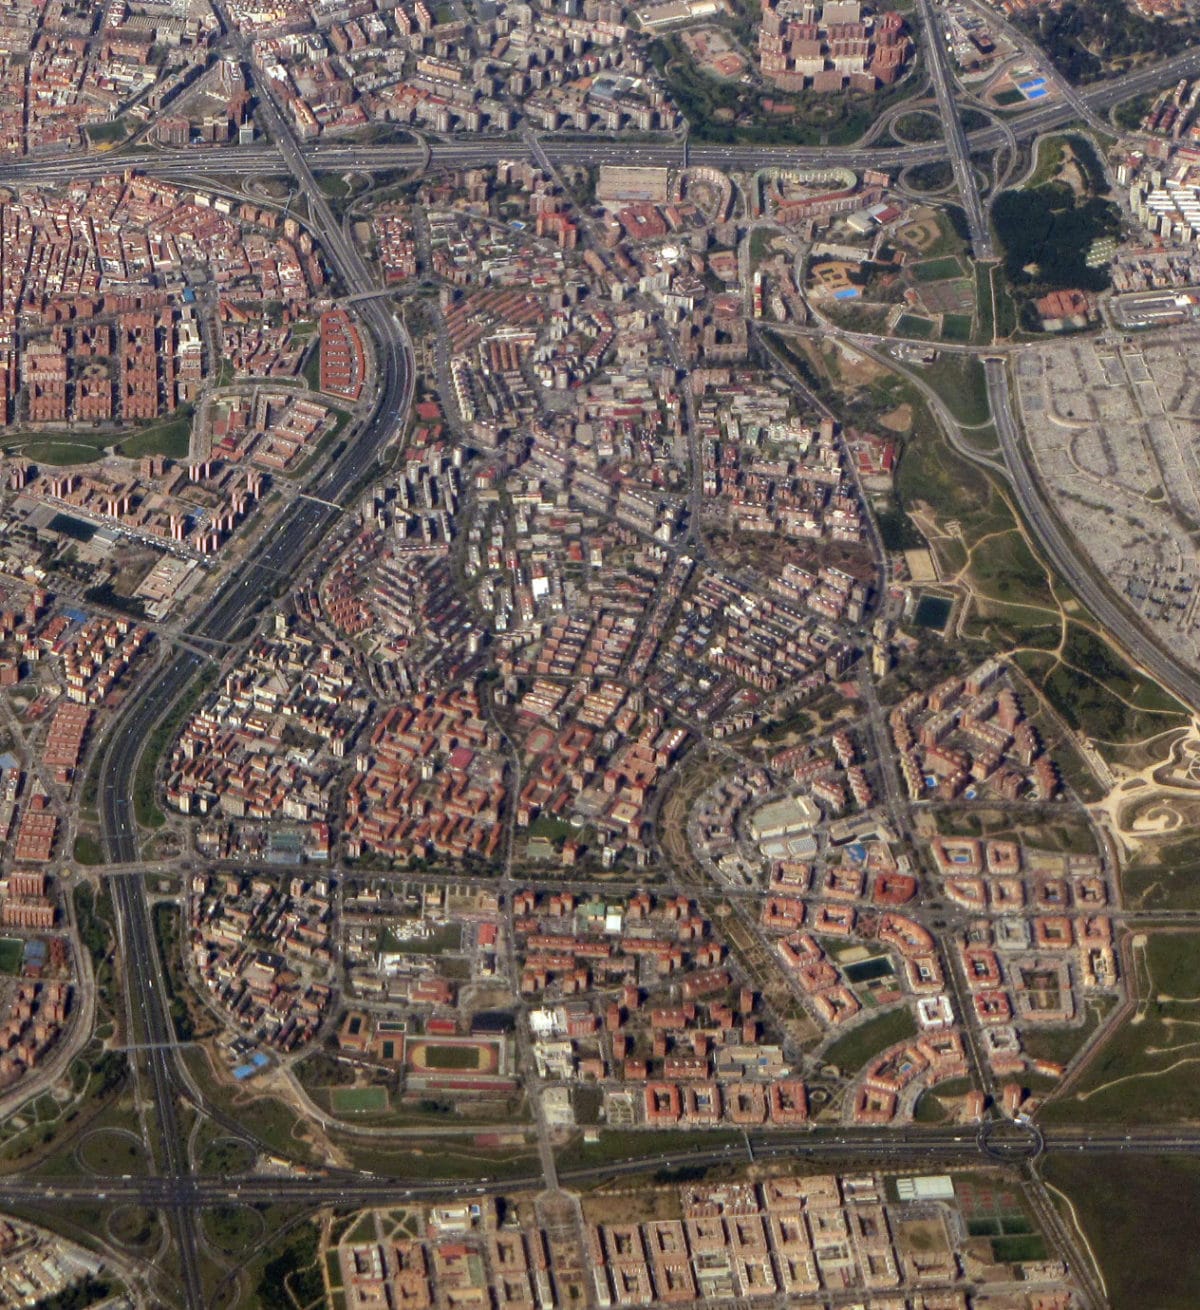 https://madrid365.es/wp-content/uploads/2021/04/Puente_de_Vallecas_-_Aerial_photograph_color_contrast_tone_cropped_Moratalaz.jpg